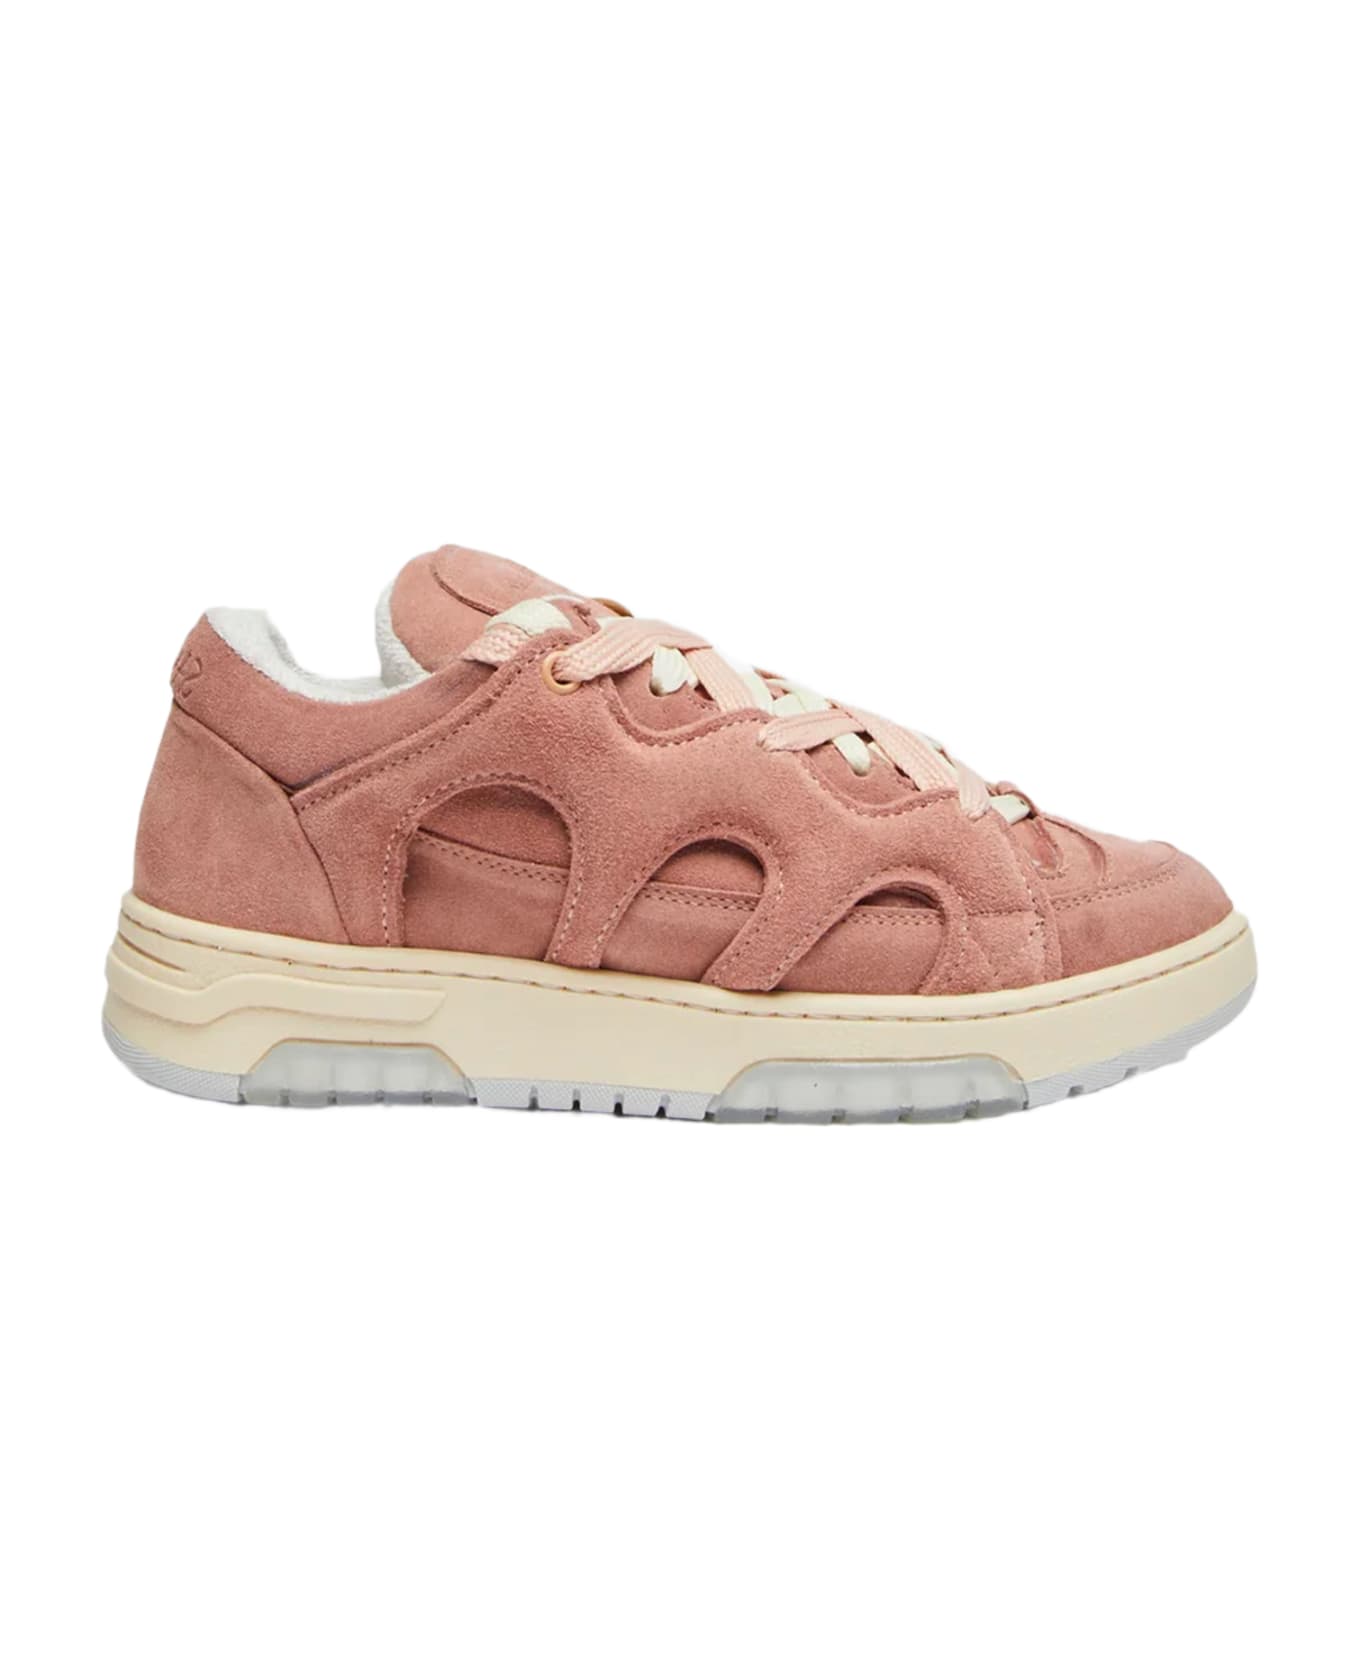 Paura Santha 1 Suede Antique Pink Suede Low Sneaker - Rosa スニーカー